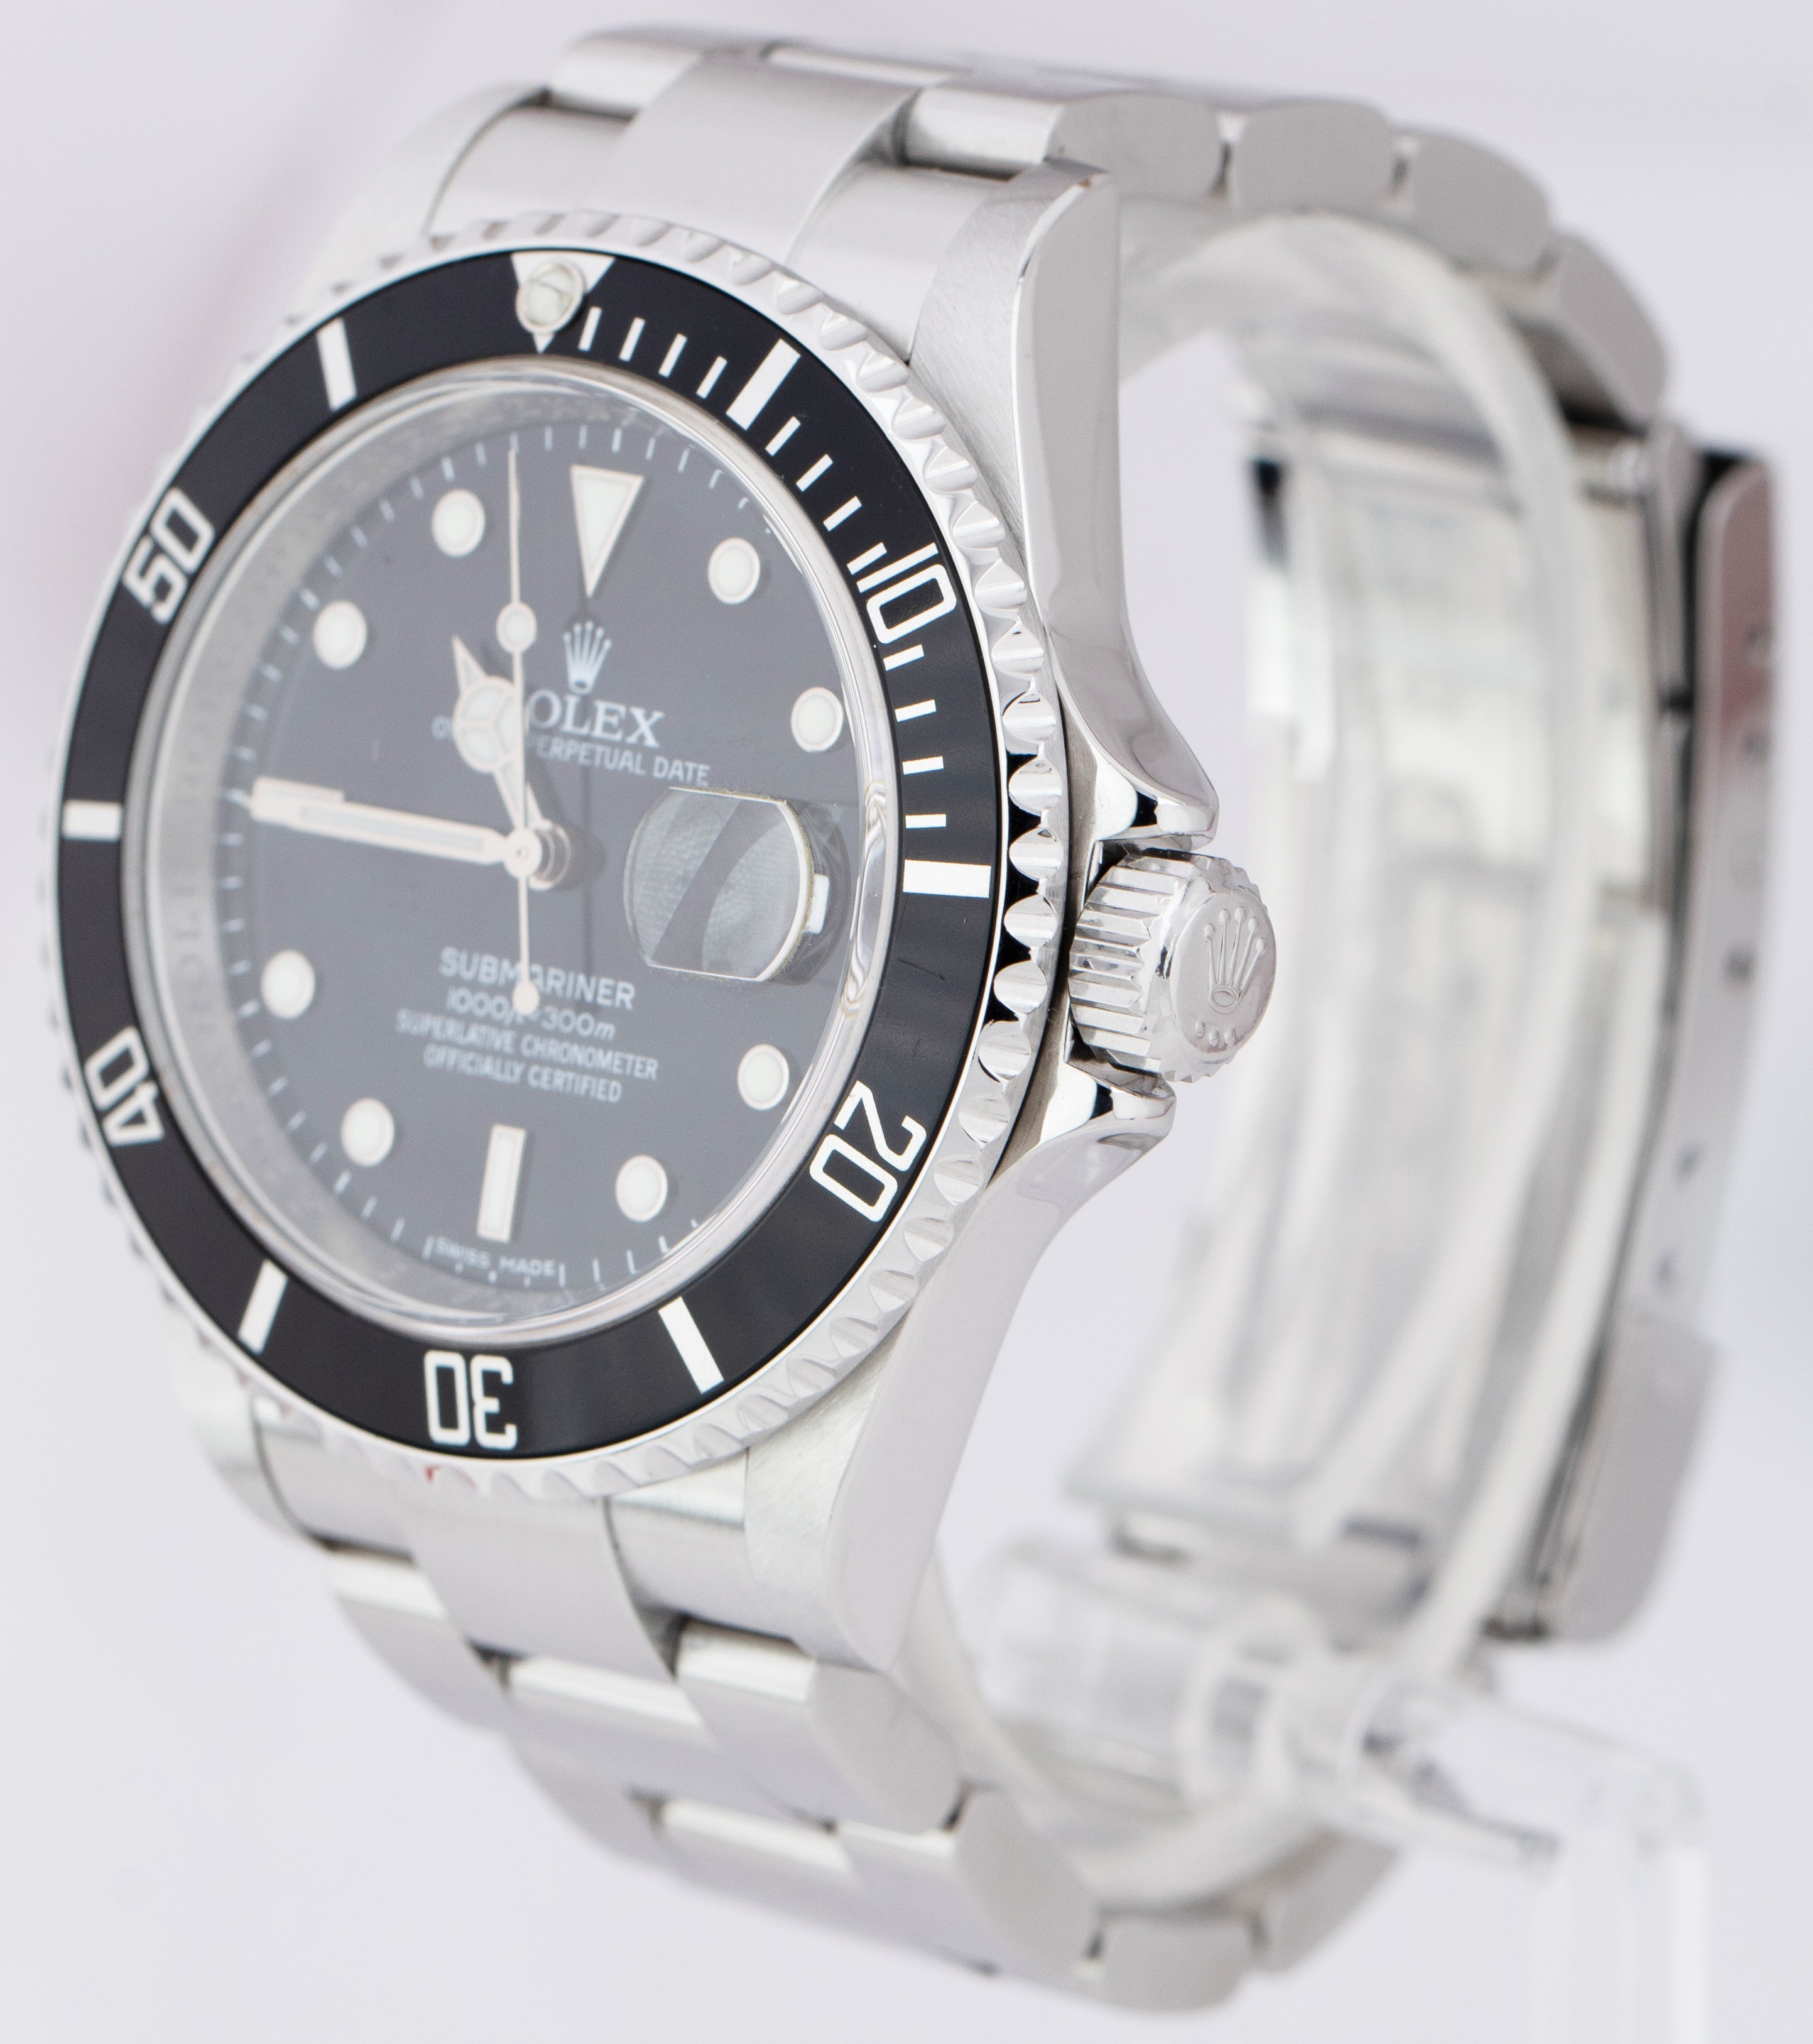 Rolex Submariner Date REHAUT 40mm Black Dial Stainless Steel Dive Watch 16610